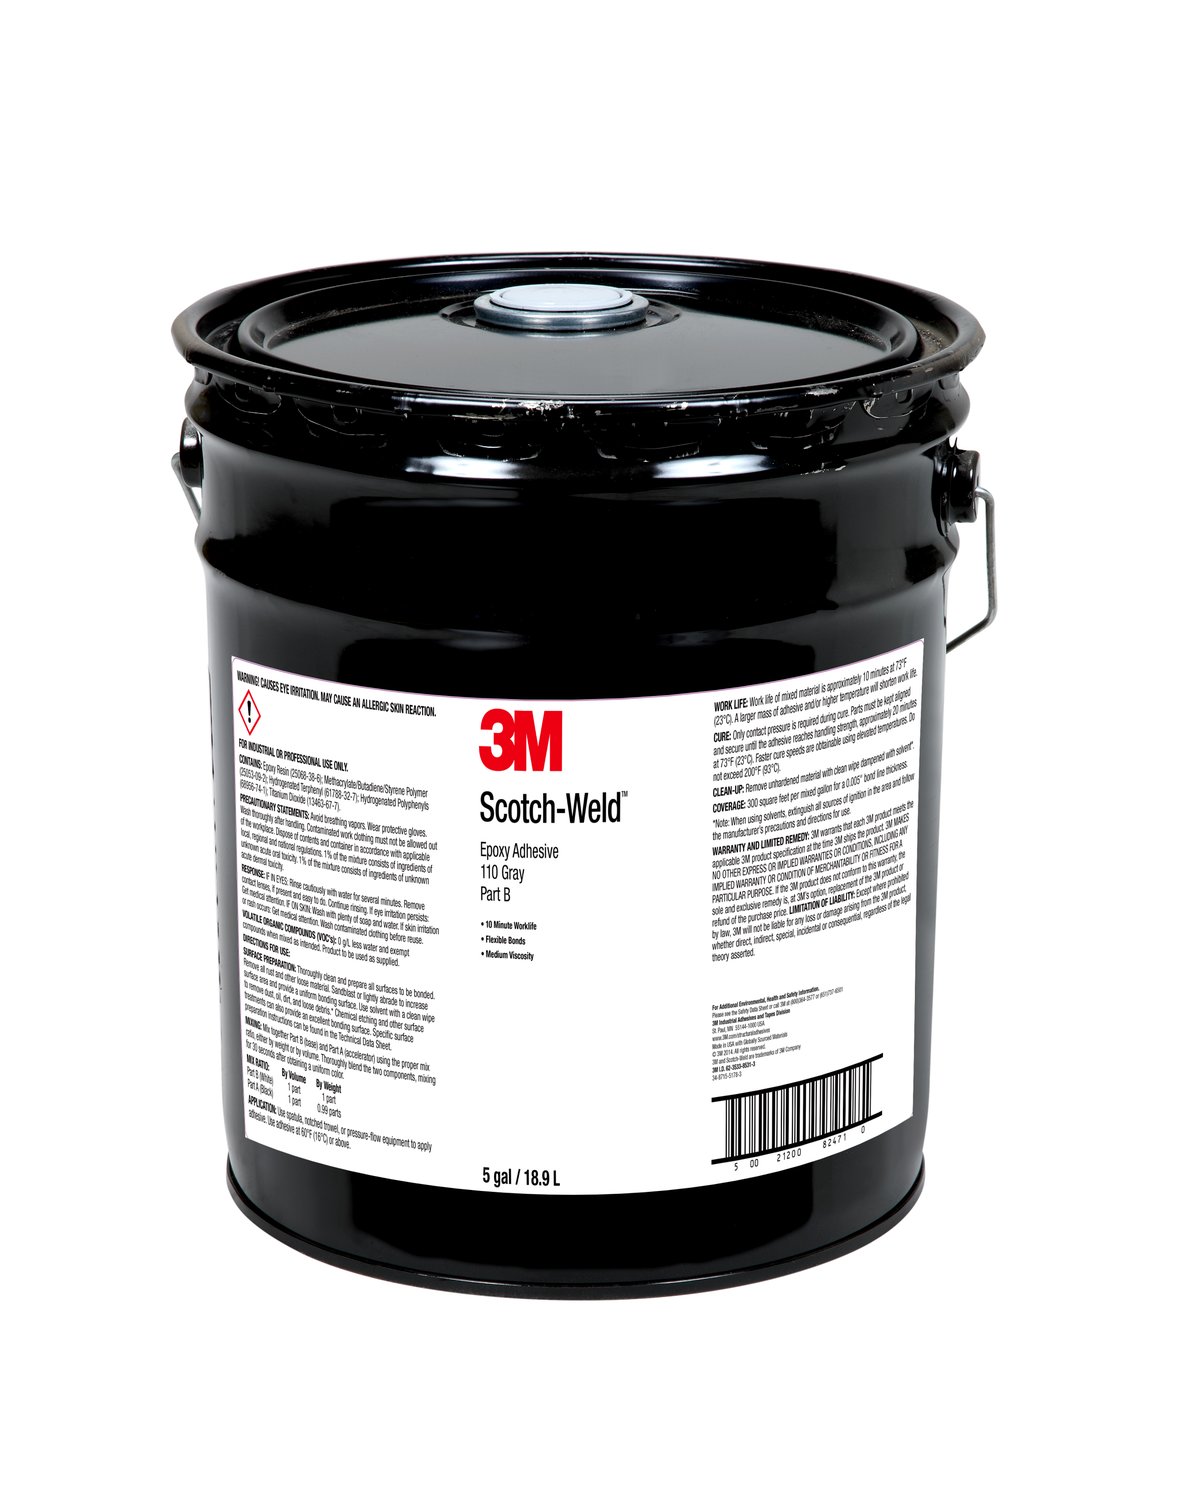 7010299357 - 3M Scotch-Weld Epoxy Adhesive 110, Gray, Part B, 5 Gallon (Pail), Drum